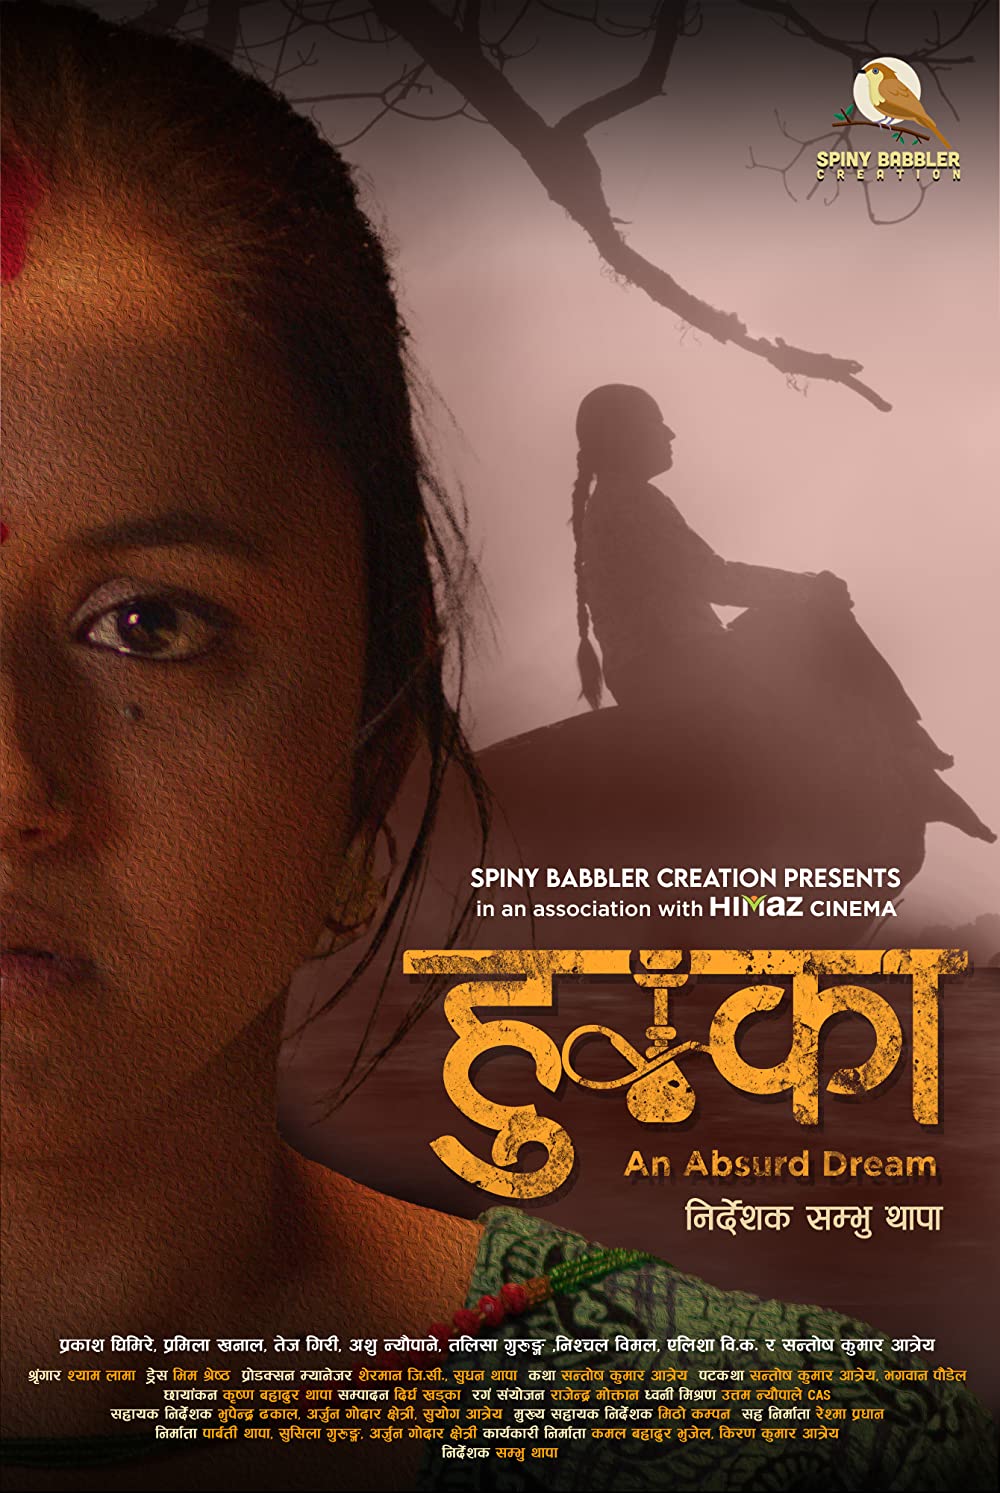 Nepali Movie "Hookah"